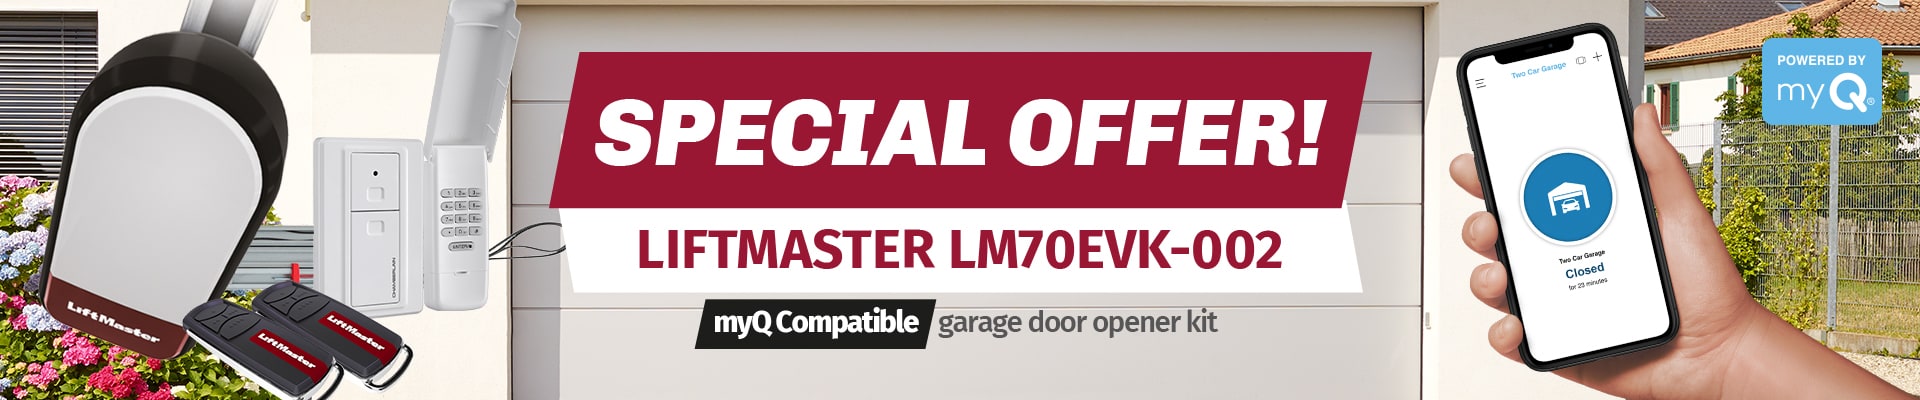 LiftMaster LM70EVK-002 special offer! myQ compatible garage door opener kit.